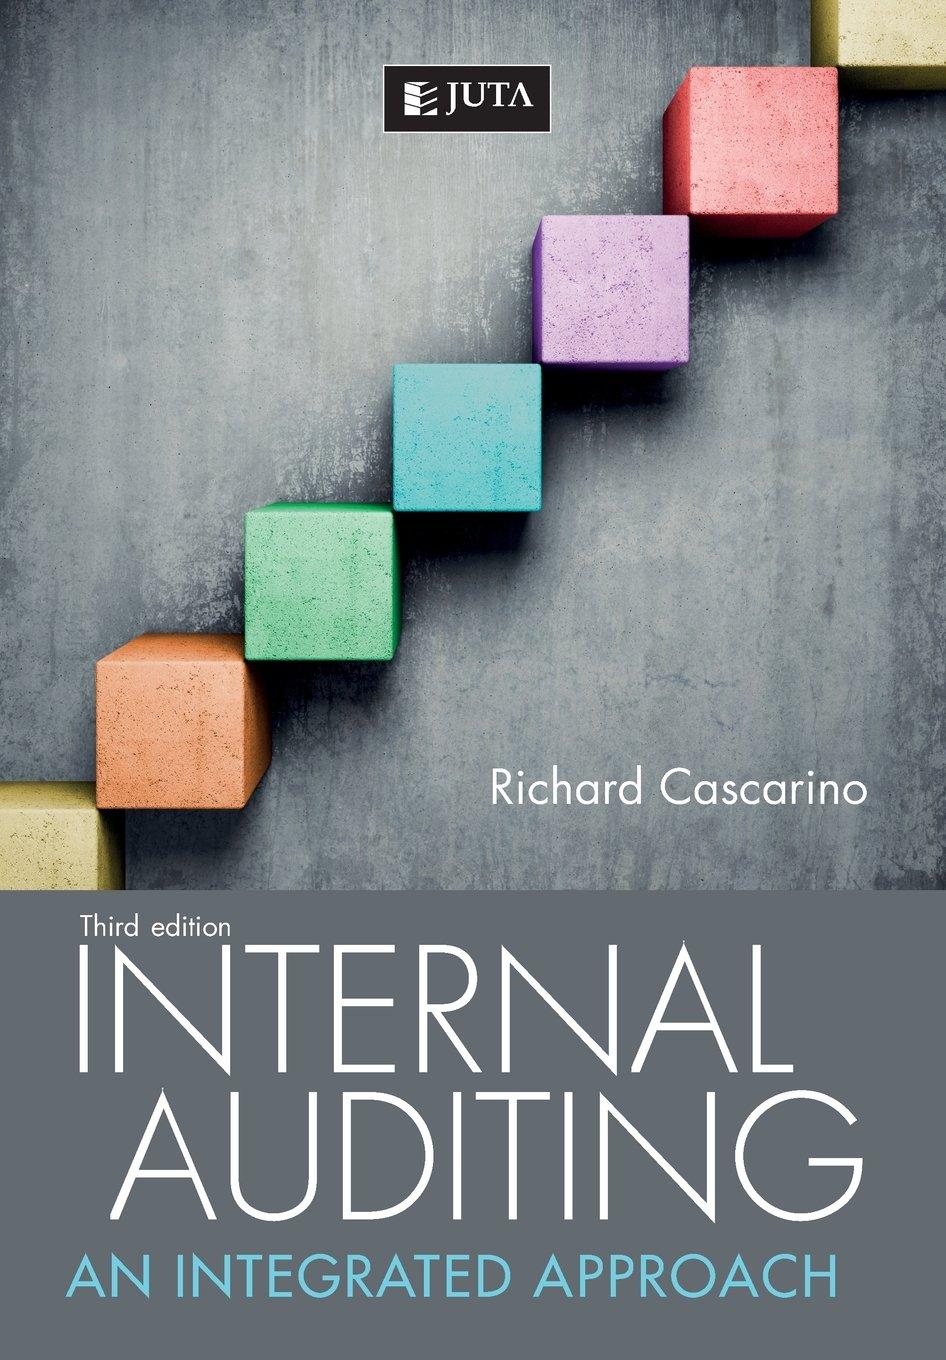 internal auditing an integrated approach 3rd edition richard cascarino 1485110599, 978-1485110590